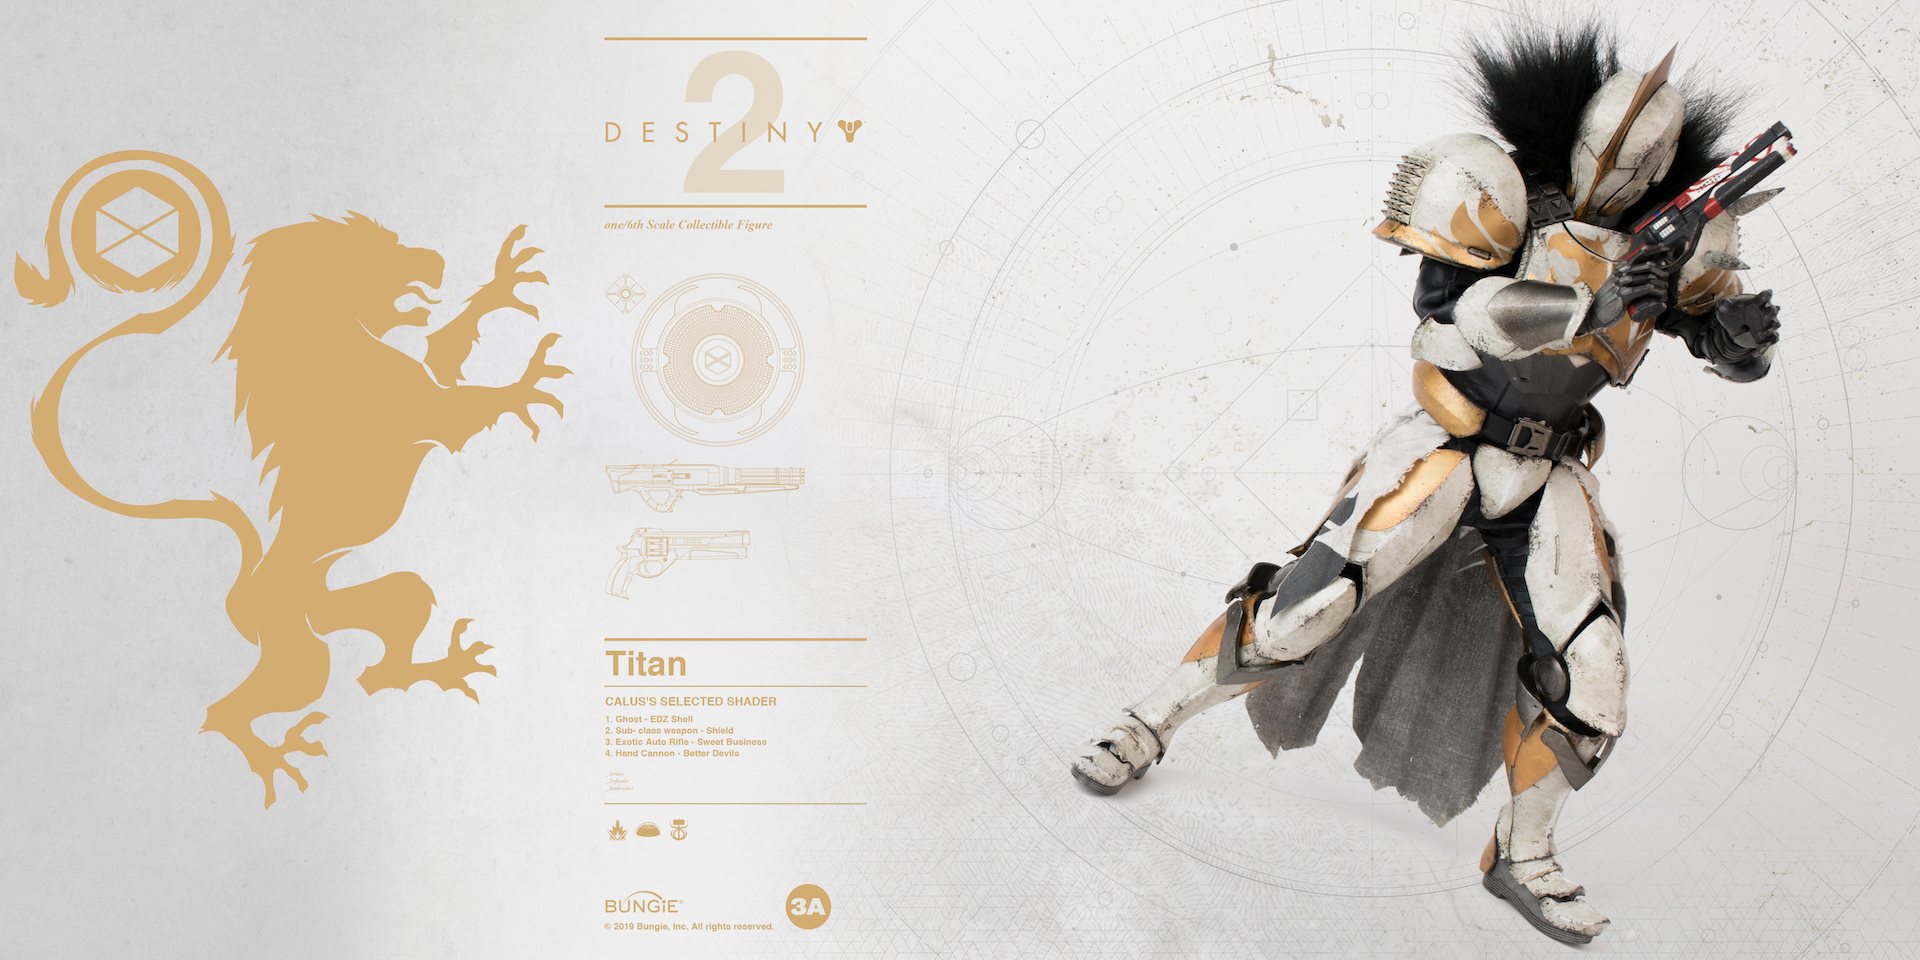 ThreeA - Destiny 2 - Titan (Calus&#39;s Selected Shader) (1/6 Scale) - Marvelous Toys